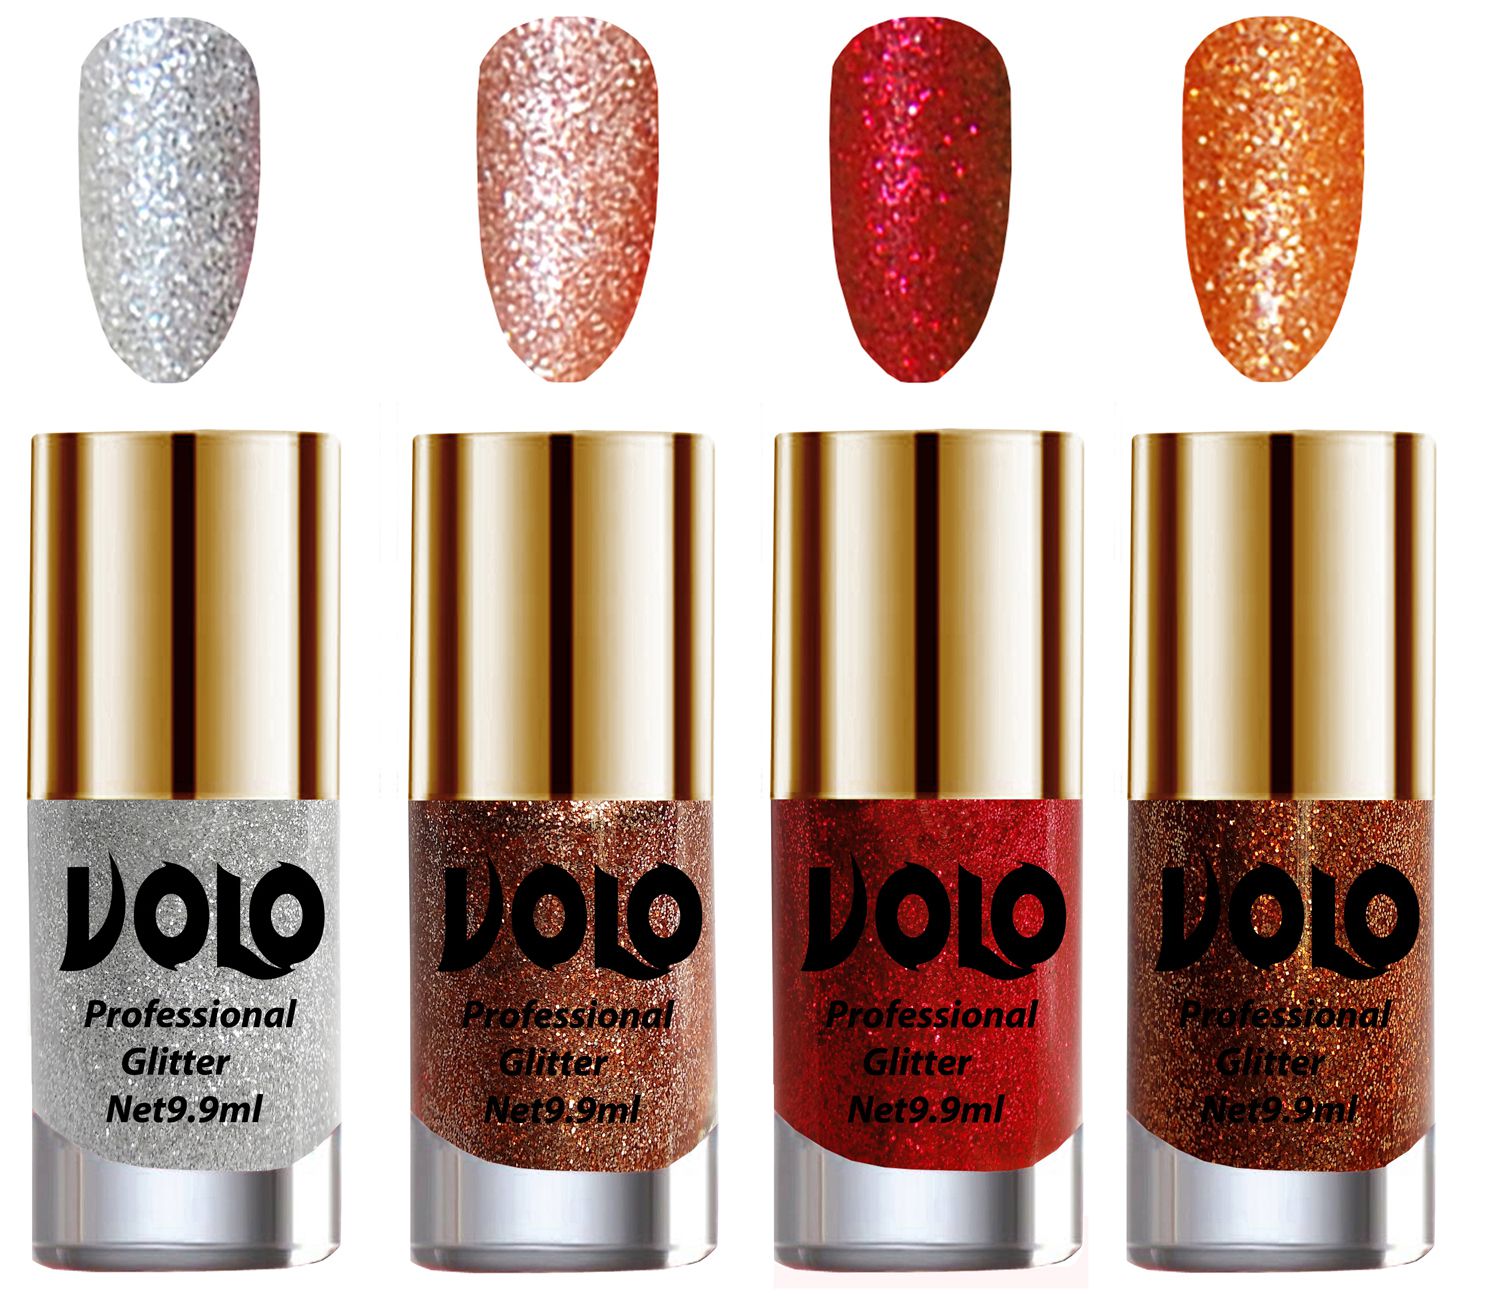     			VOLO Professionally Used Glitter Shine Nail Polish Silver,Peach,Red Orange Pack of 4 39 mL